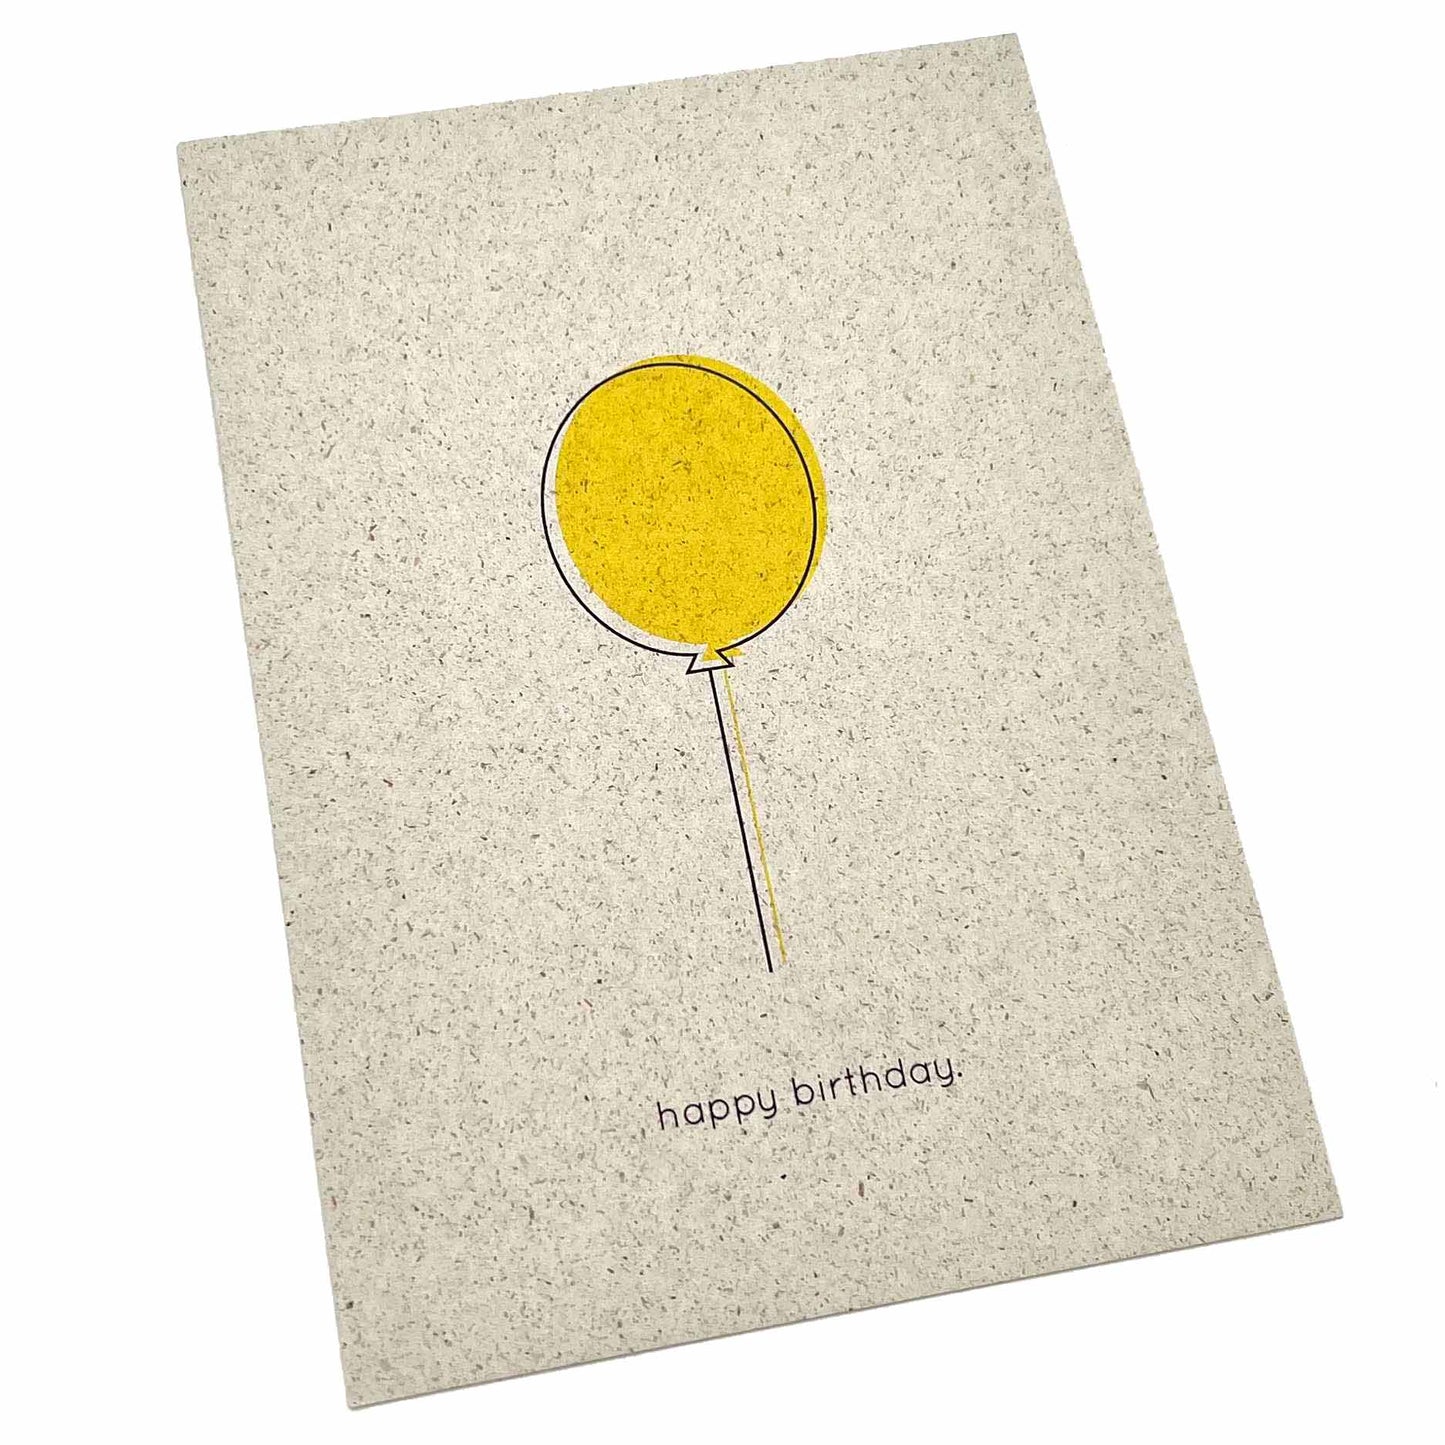 SVEEKA nachhaltige Postkarte "happy birthday" mit gelbem Ballon aus Graspapier